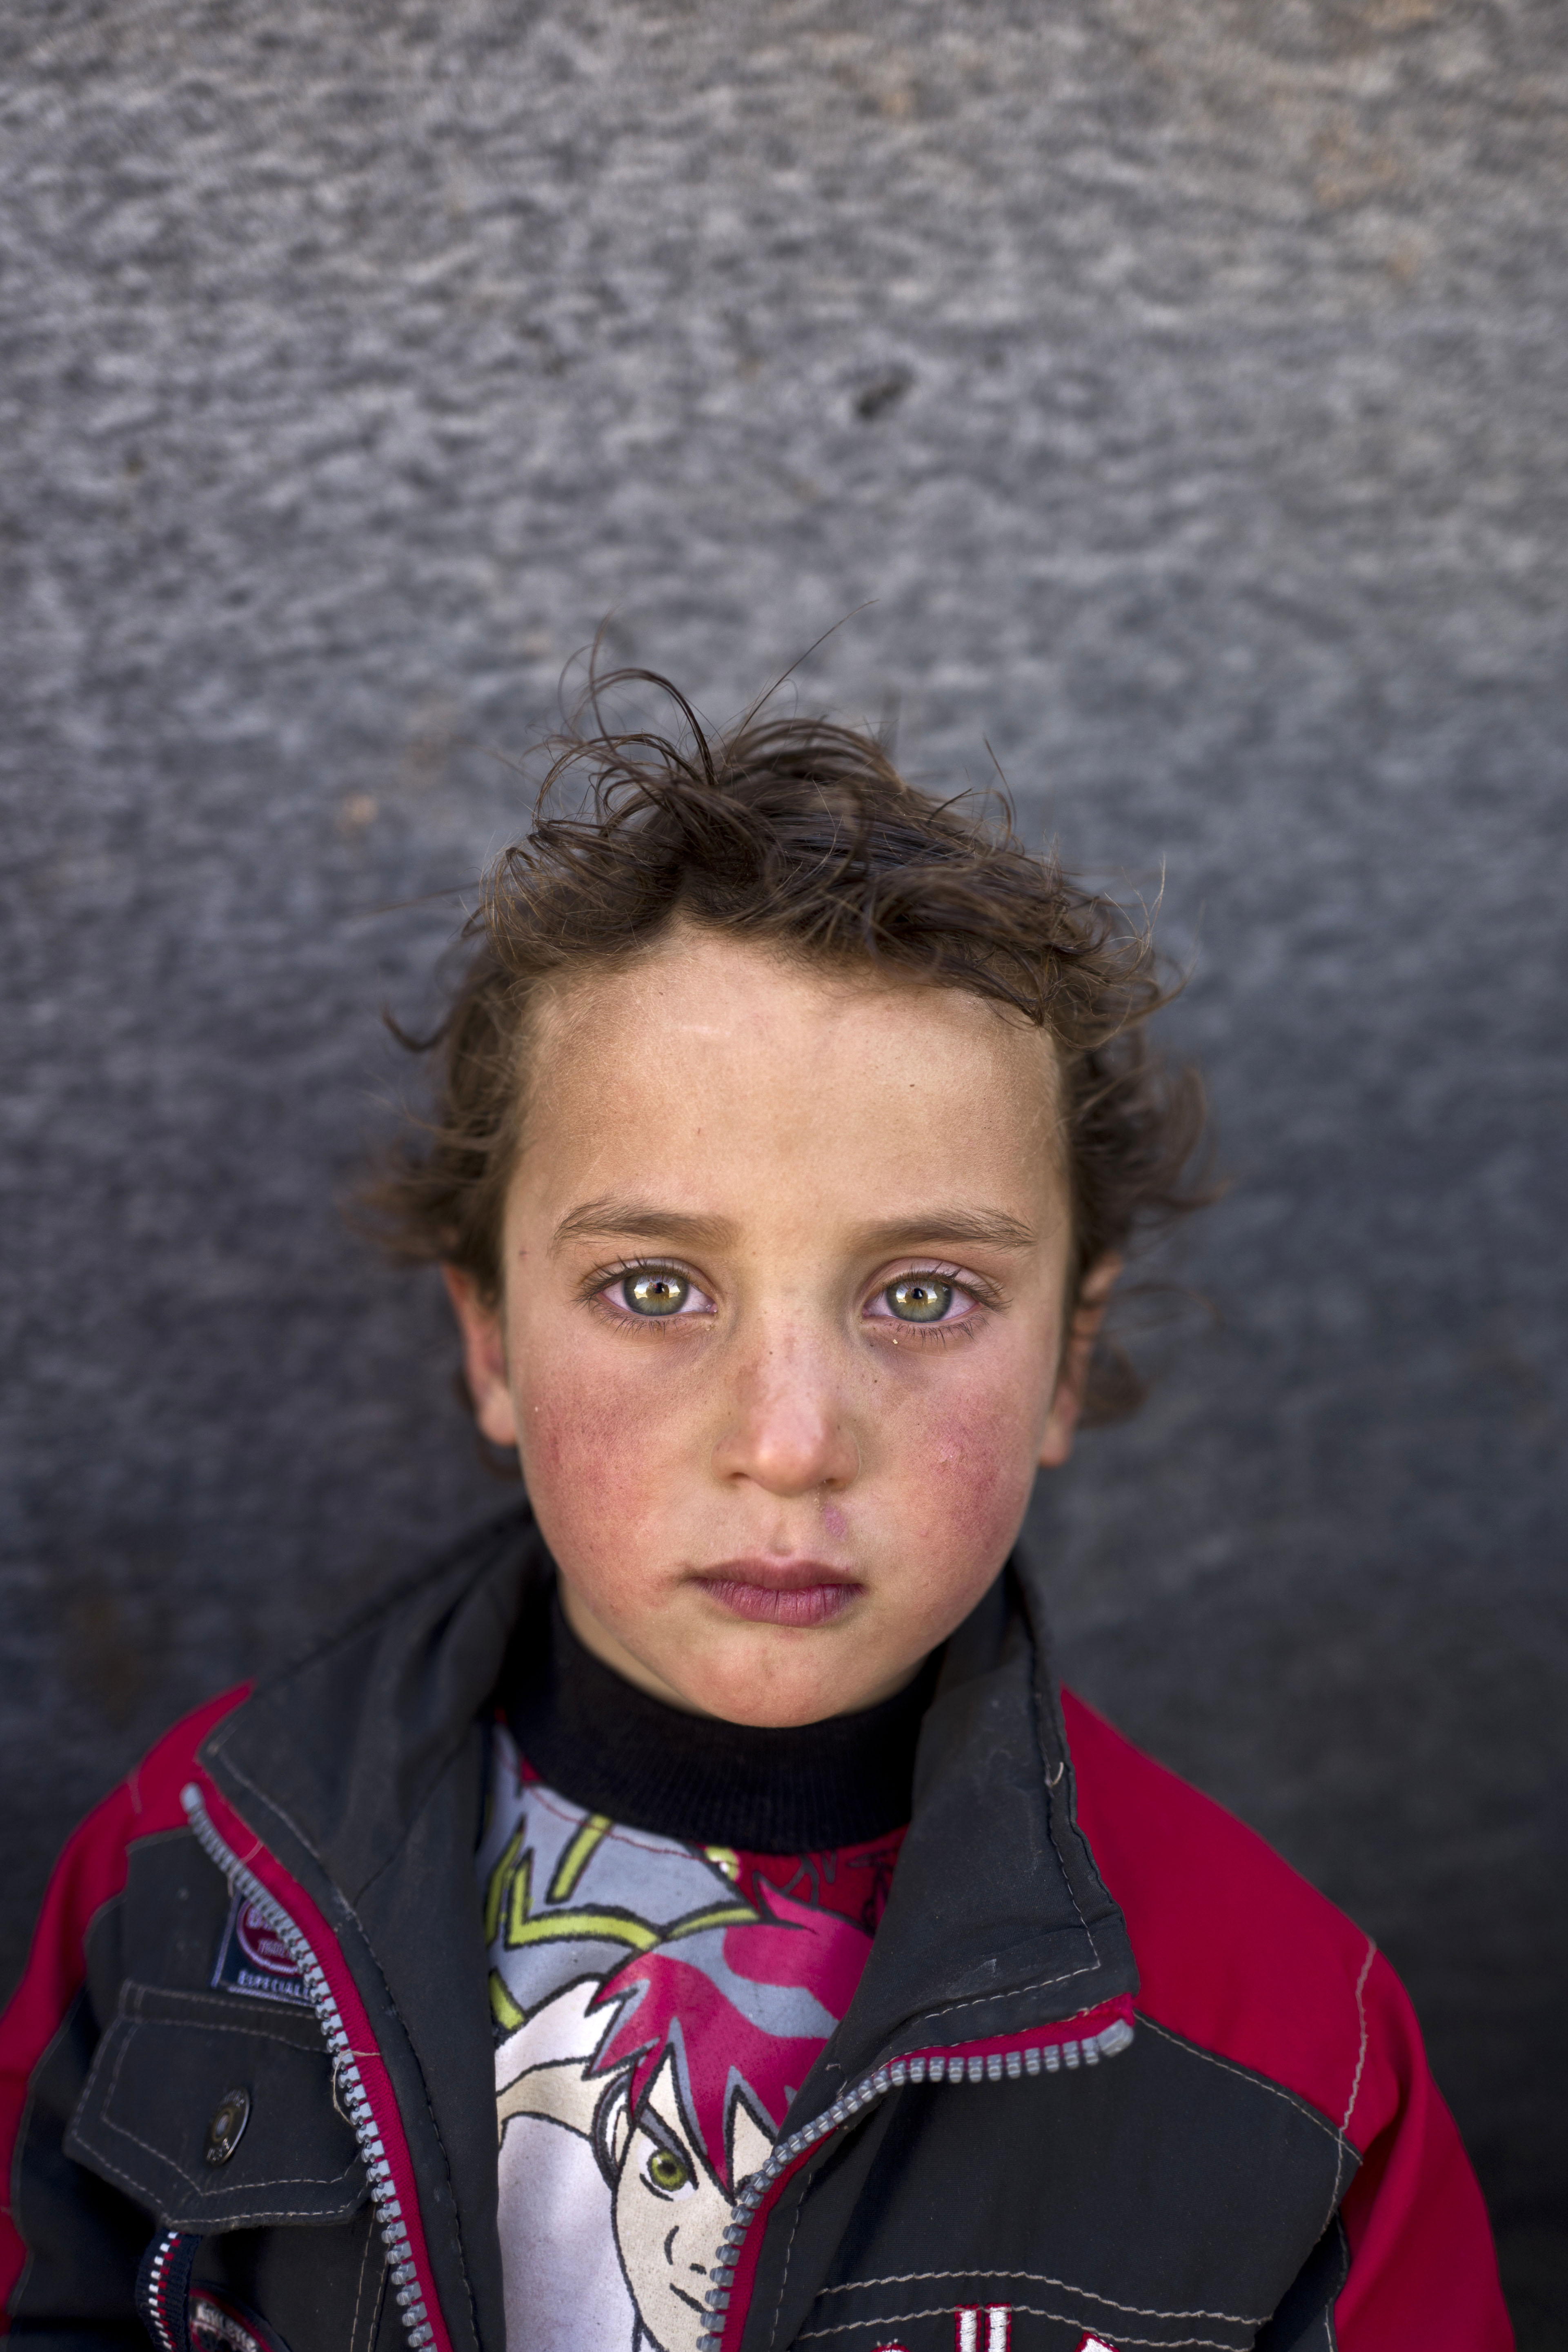 Hammad Khadir, 3, from Hassakeh.